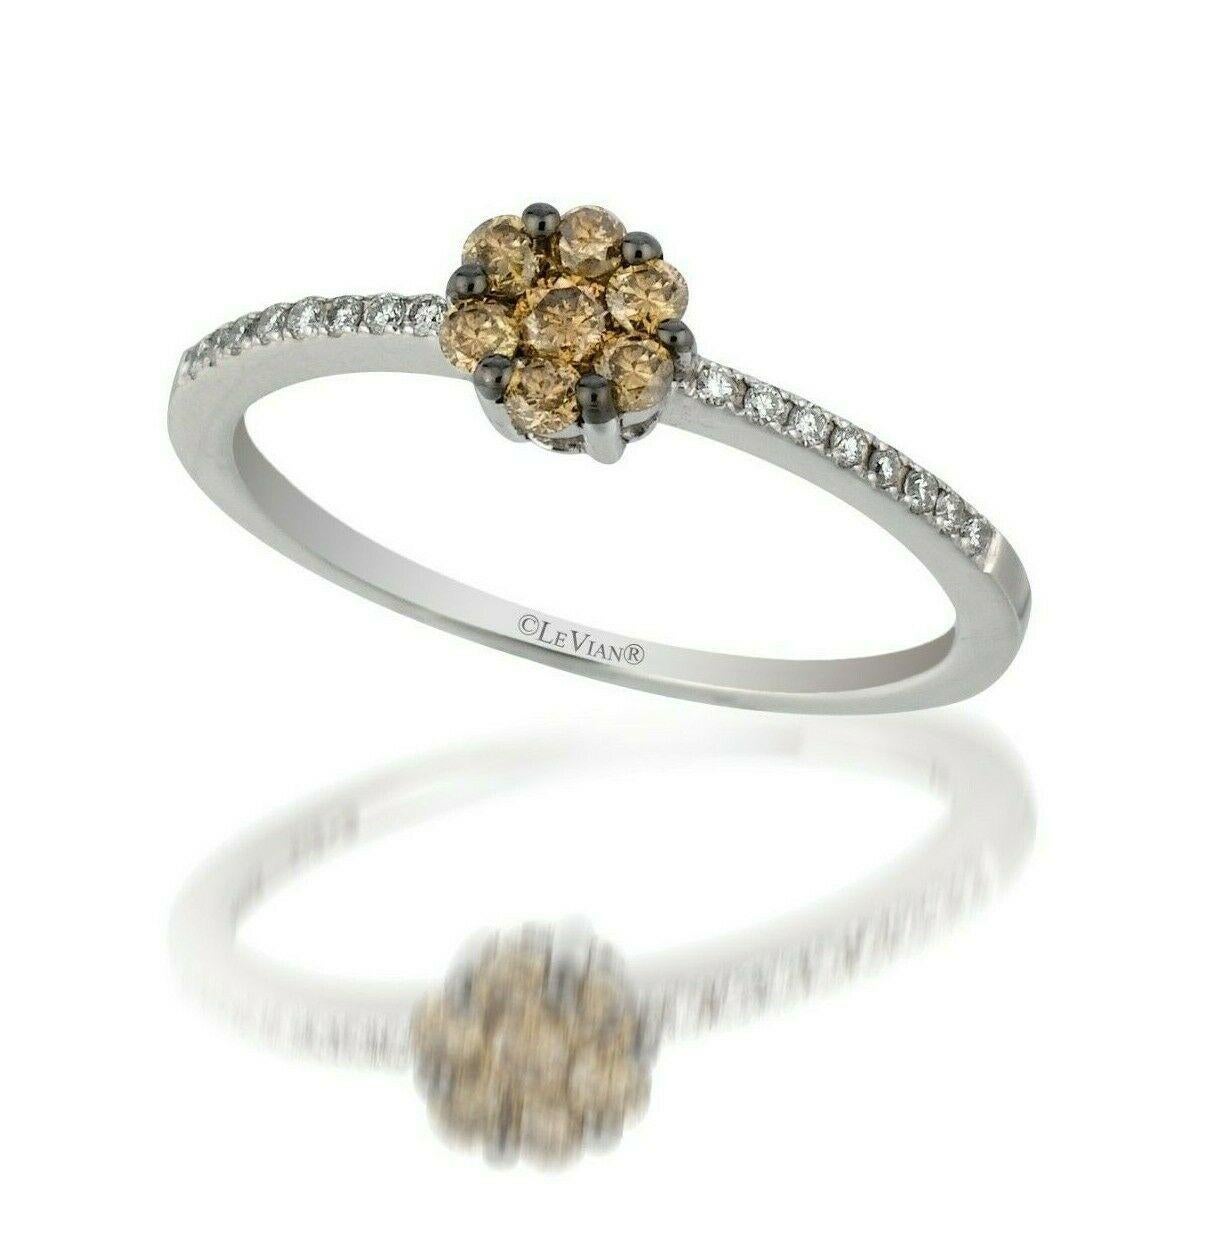 LeVian Diamond Ring Natural 1/4 cts White Round Cut Diamond Over 14K White Gold Size 7